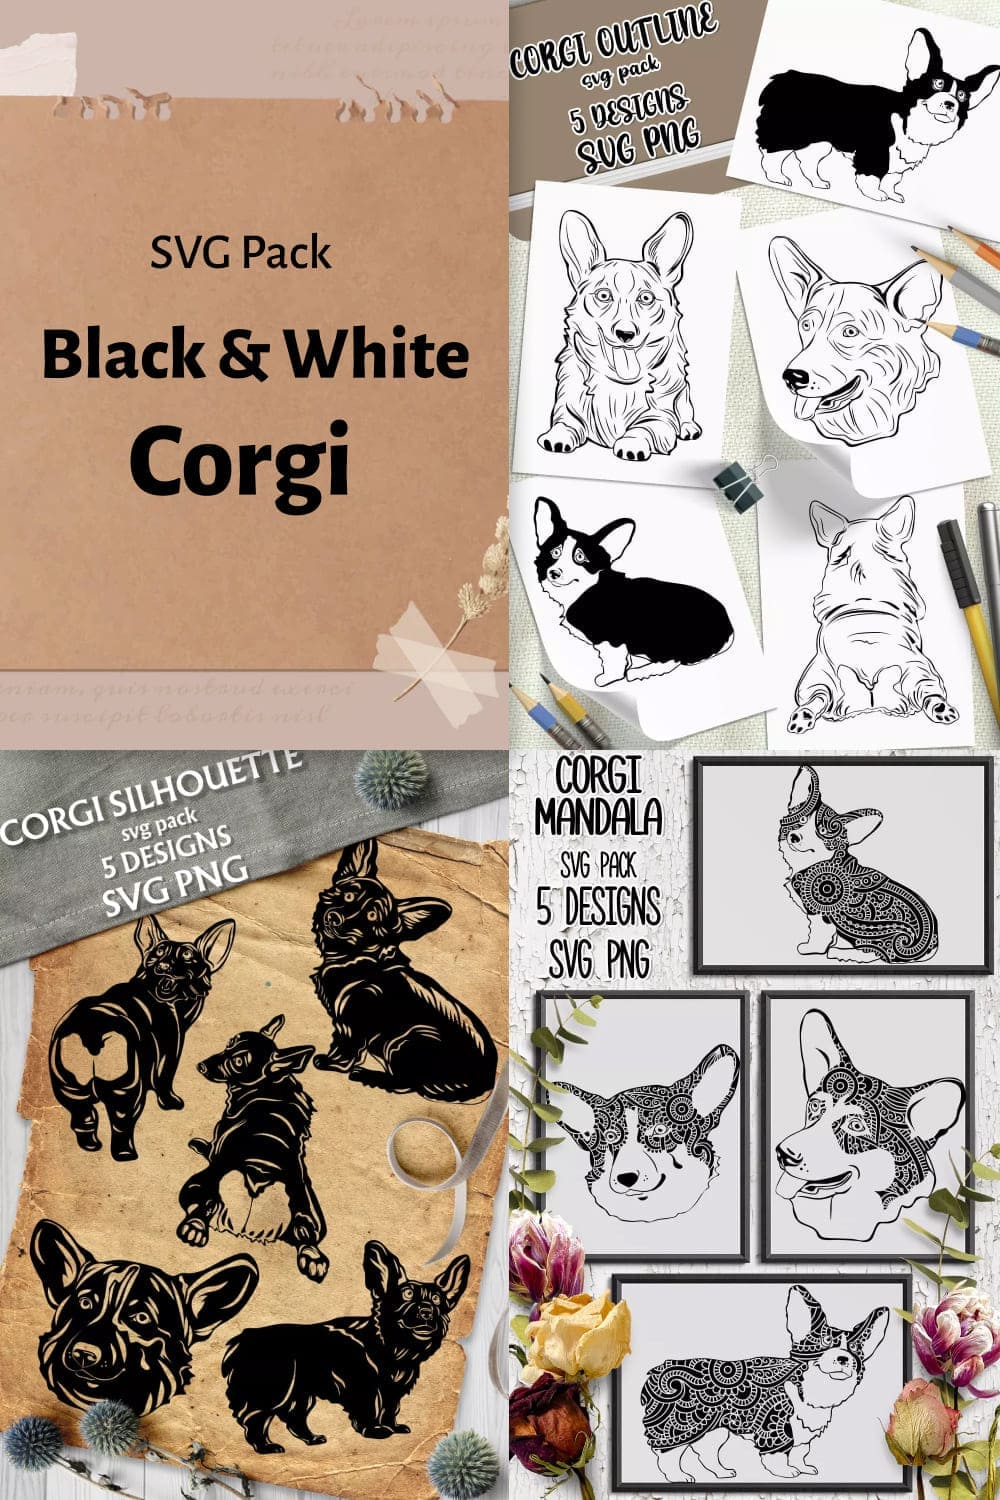 Black white corgi SVG pack, picture for pinterest 1000x1500.